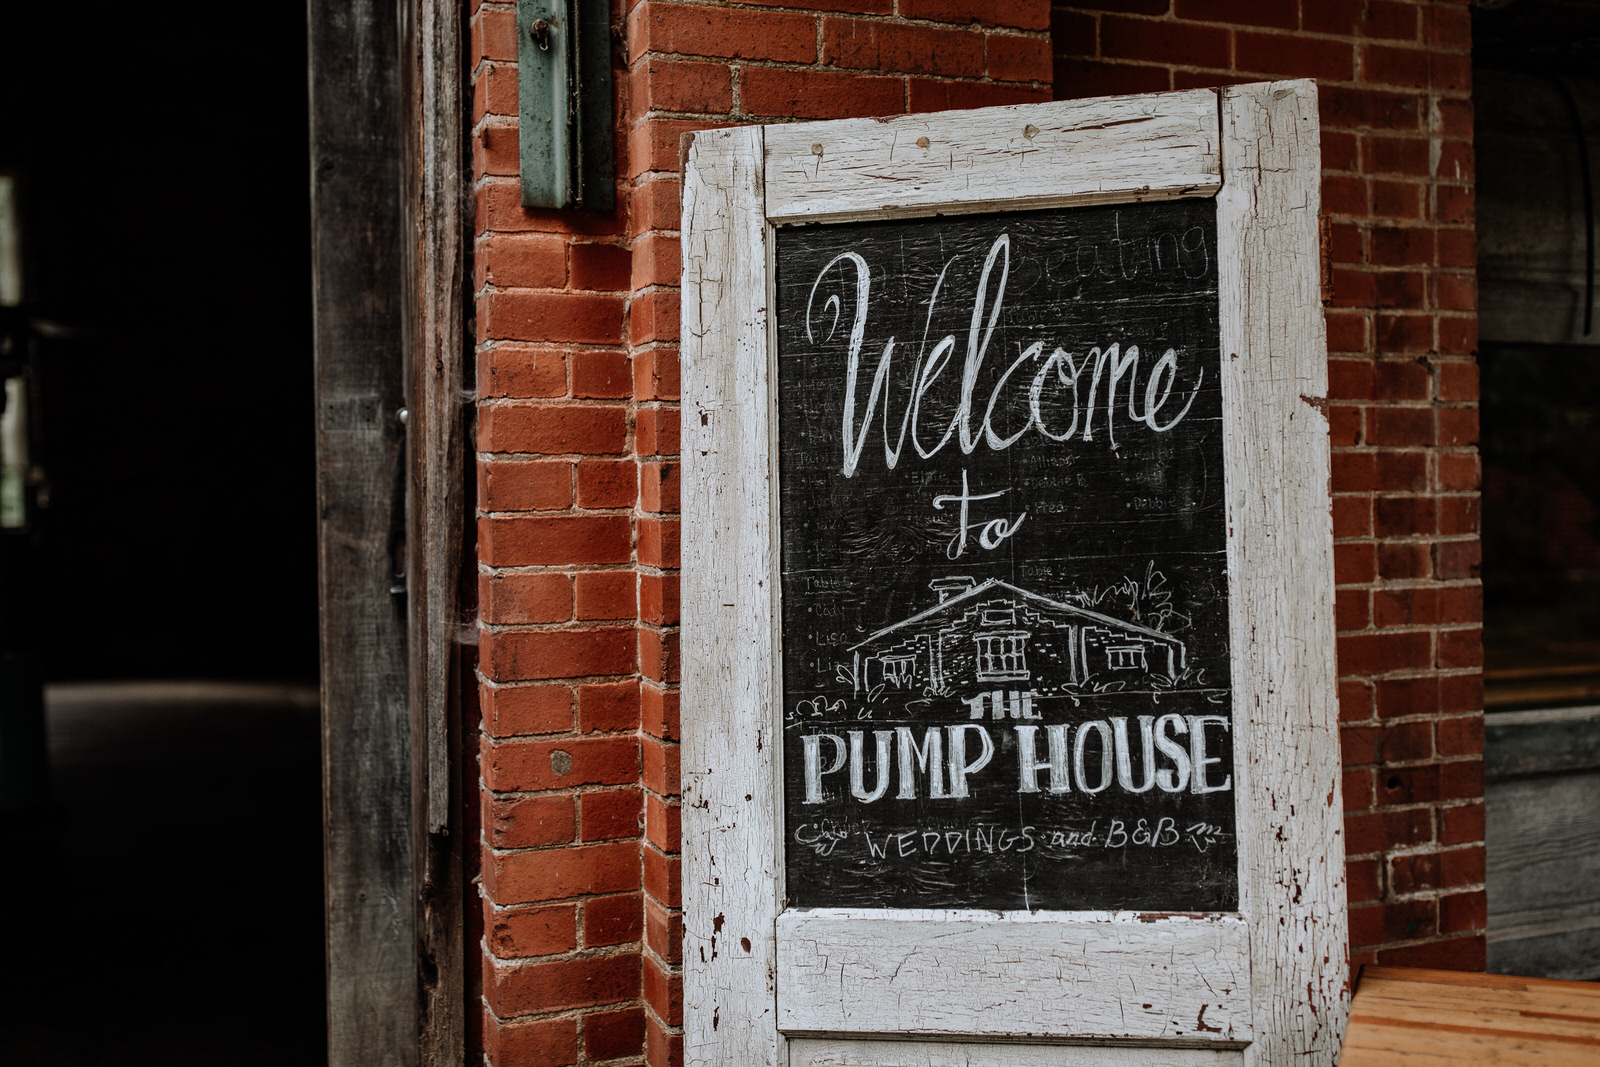 The Pump House B&B (Bloomsburg, PA) signage